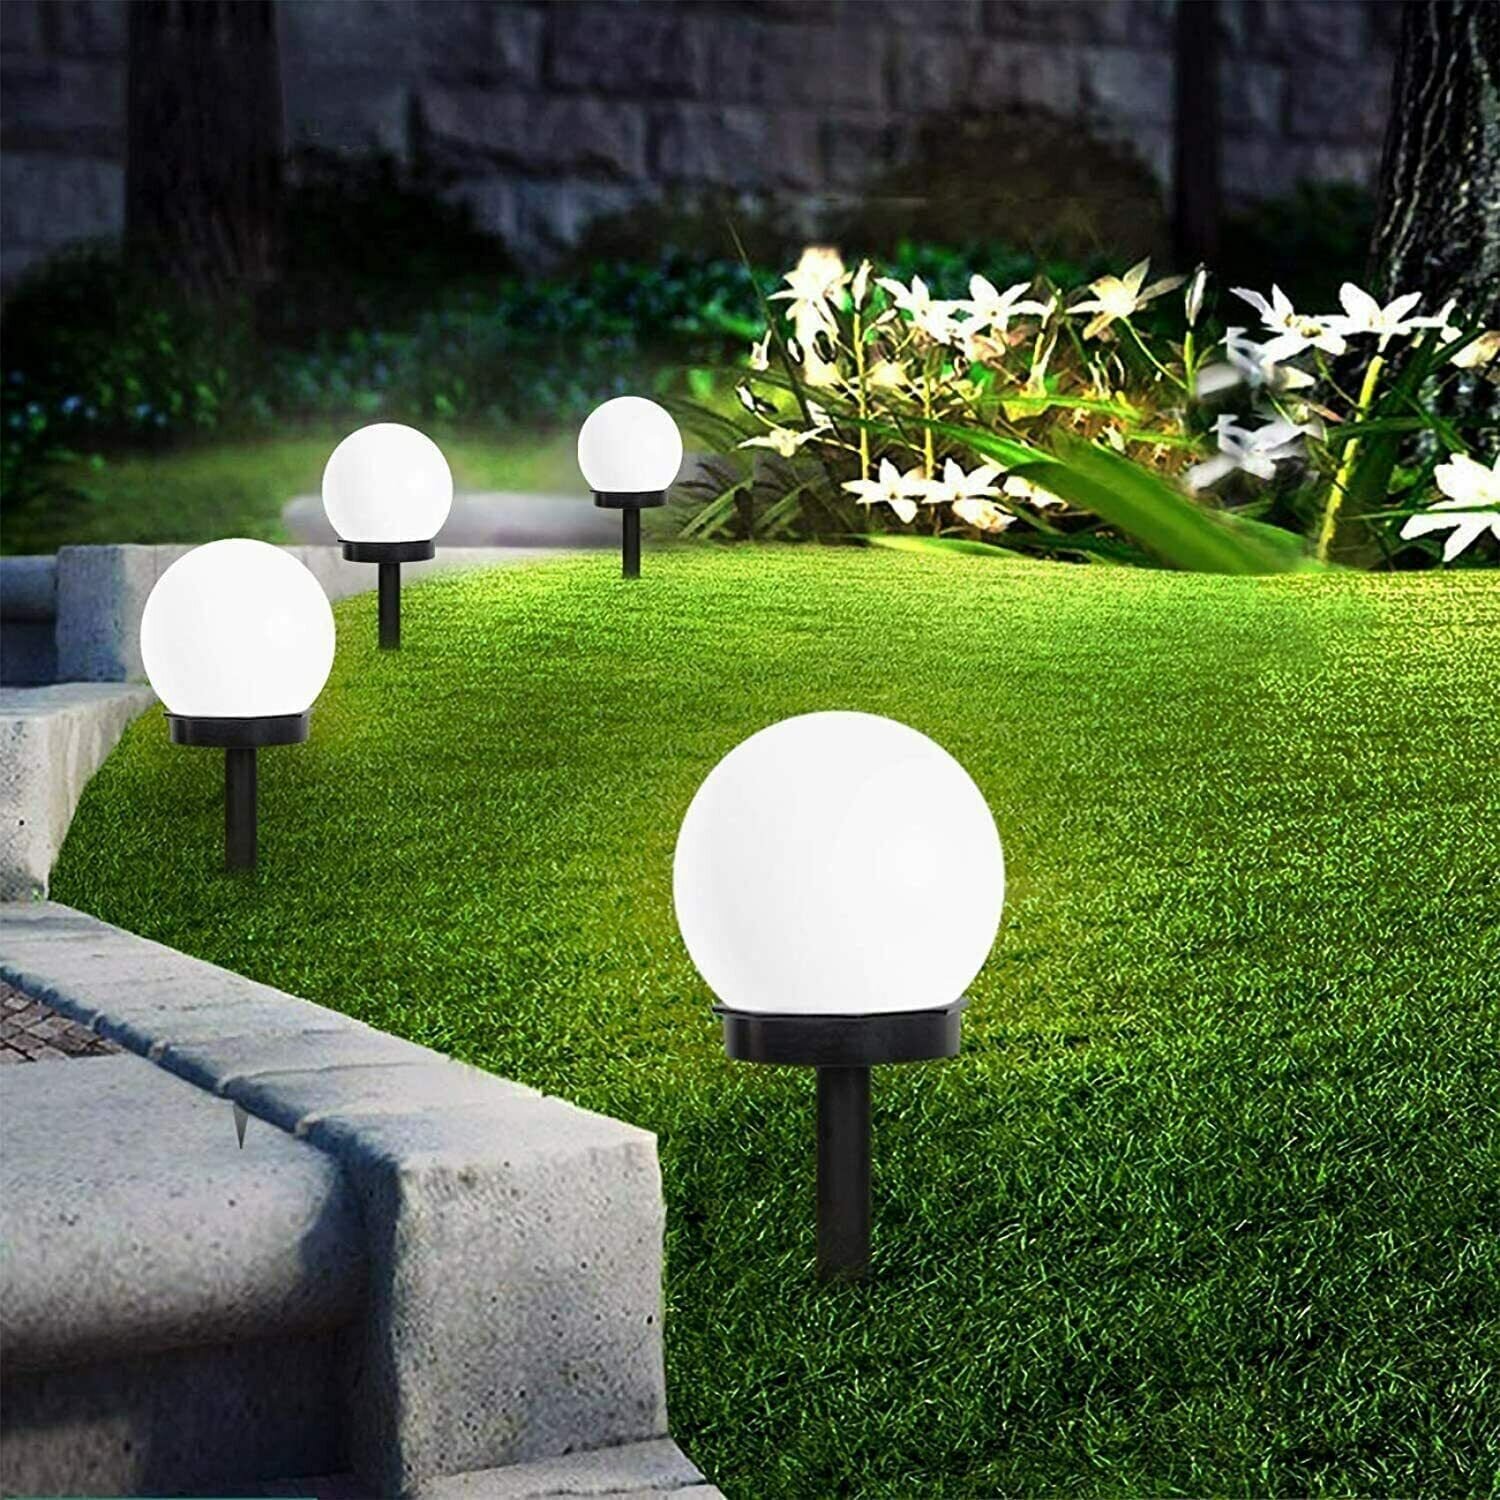 LED Outdoor Solar Powered Landscape Spotlight Yard Garden Path Lawn Lamp Light 